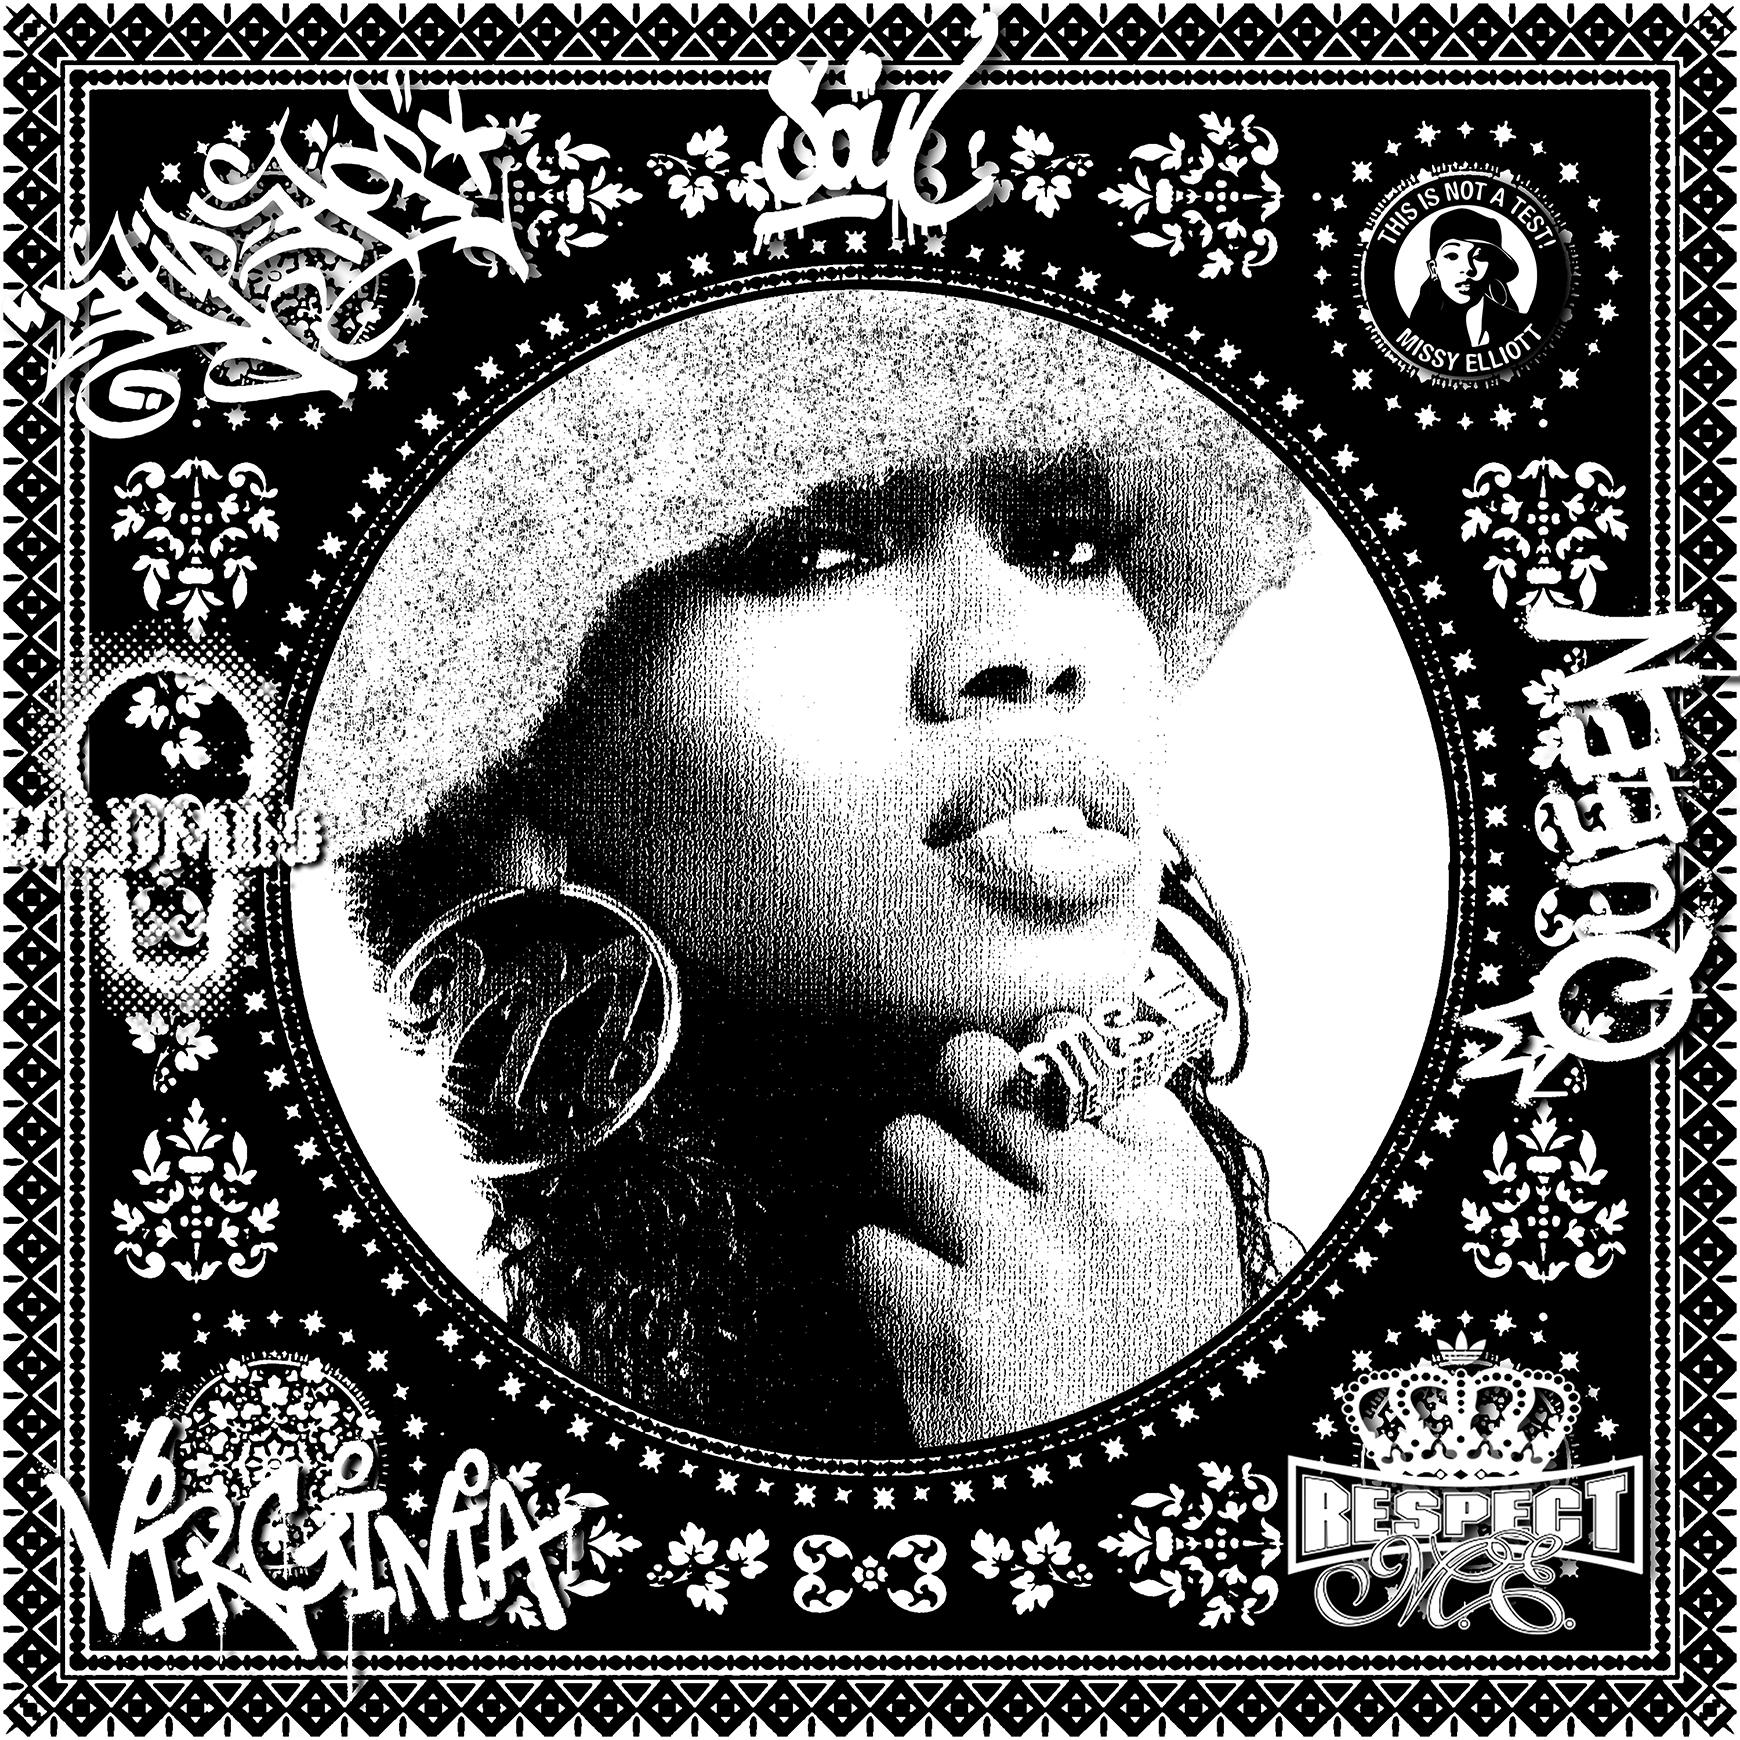 Missy Elliott (Black & White) (50 Years, Hip Hop, Rap, Iconic, Artist, Musician) - Print by Agent X